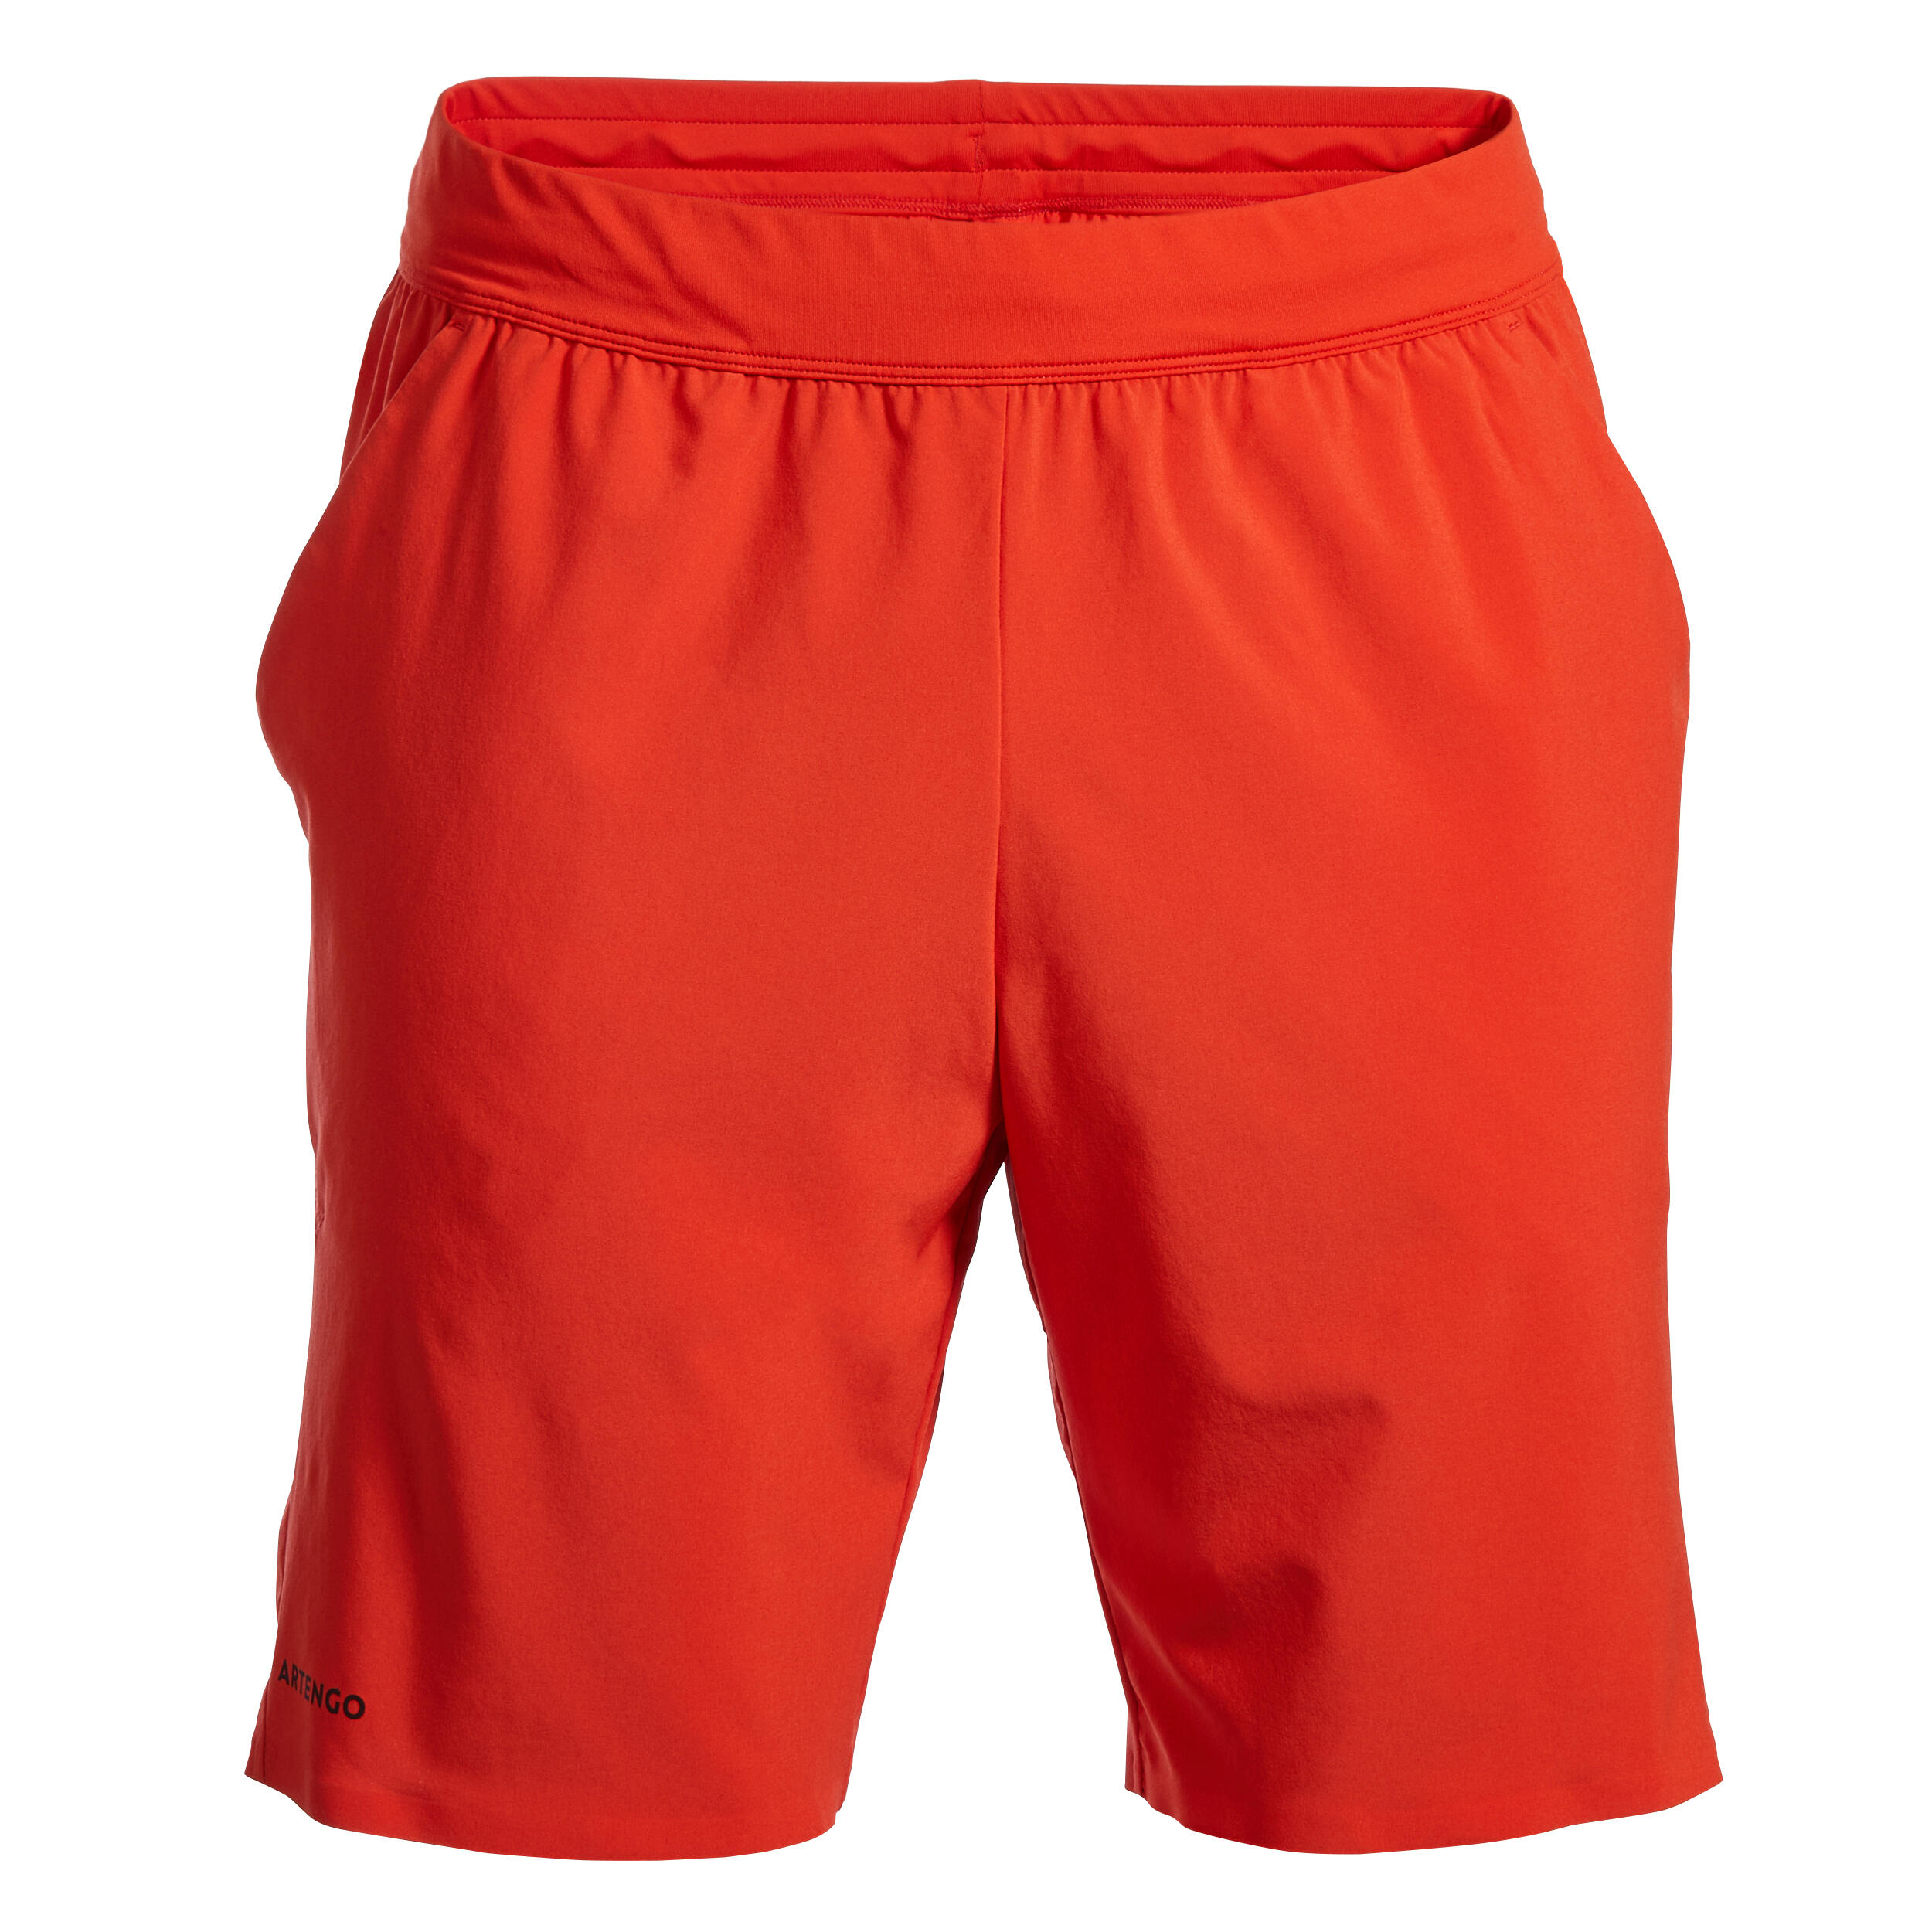 Men's Tennis Shorts TSH 900 Light - Red 7/8